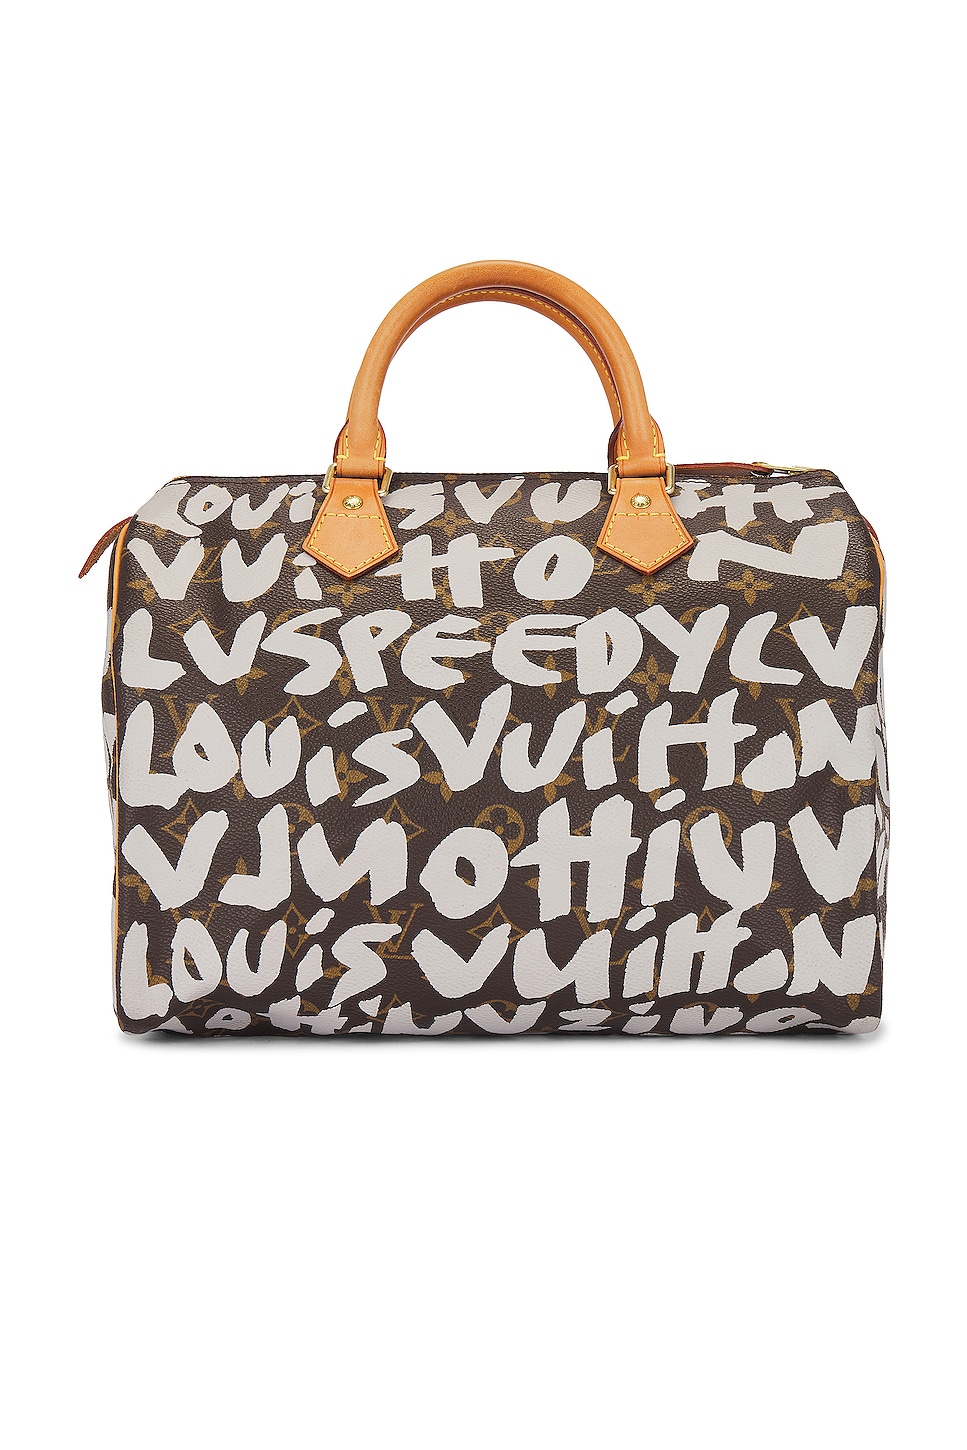 FWRD Renew Louis Vuitton Speedy Bandouliere 25 Bag in Blue